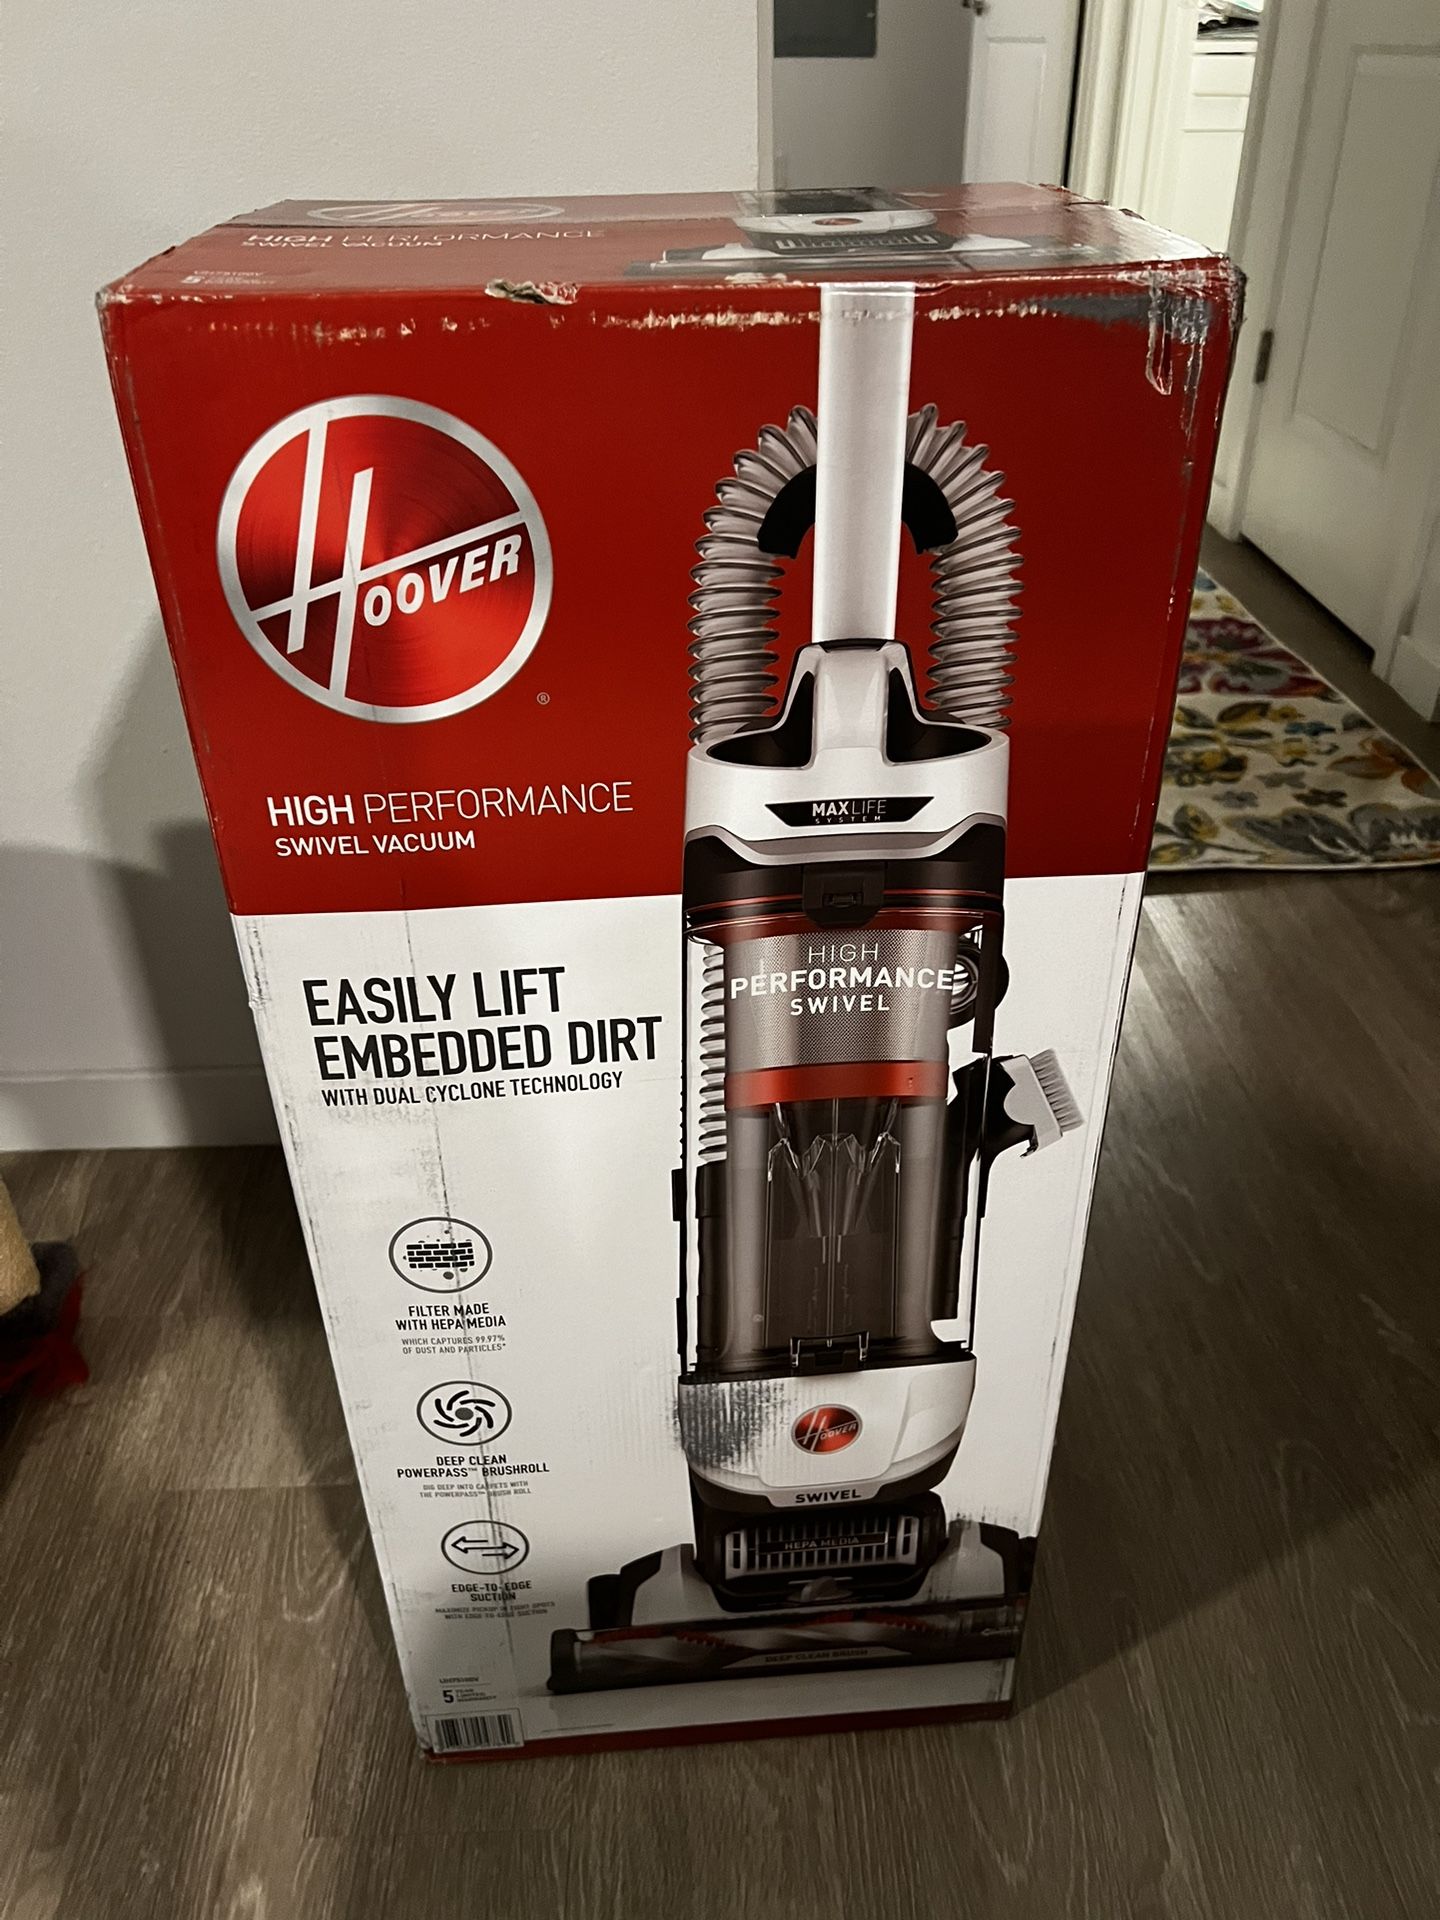 Brand new in box Hoover High Performance Swivel vacuum